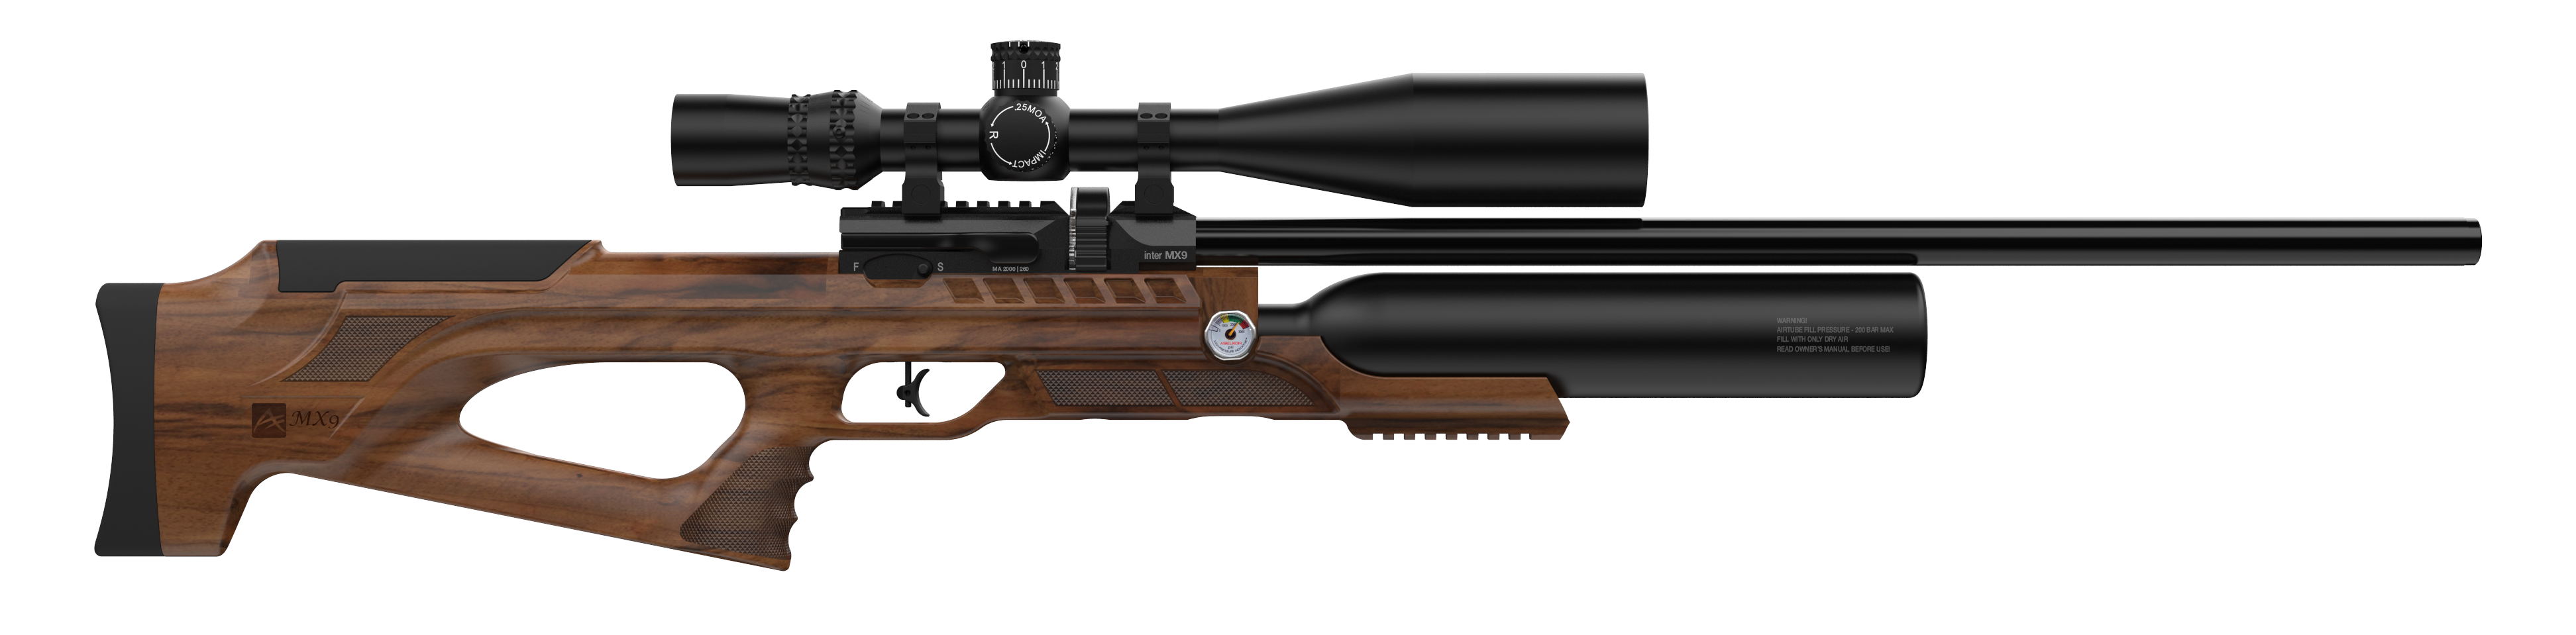 Aselkon MX9 Sniper pcp air rifle wood model